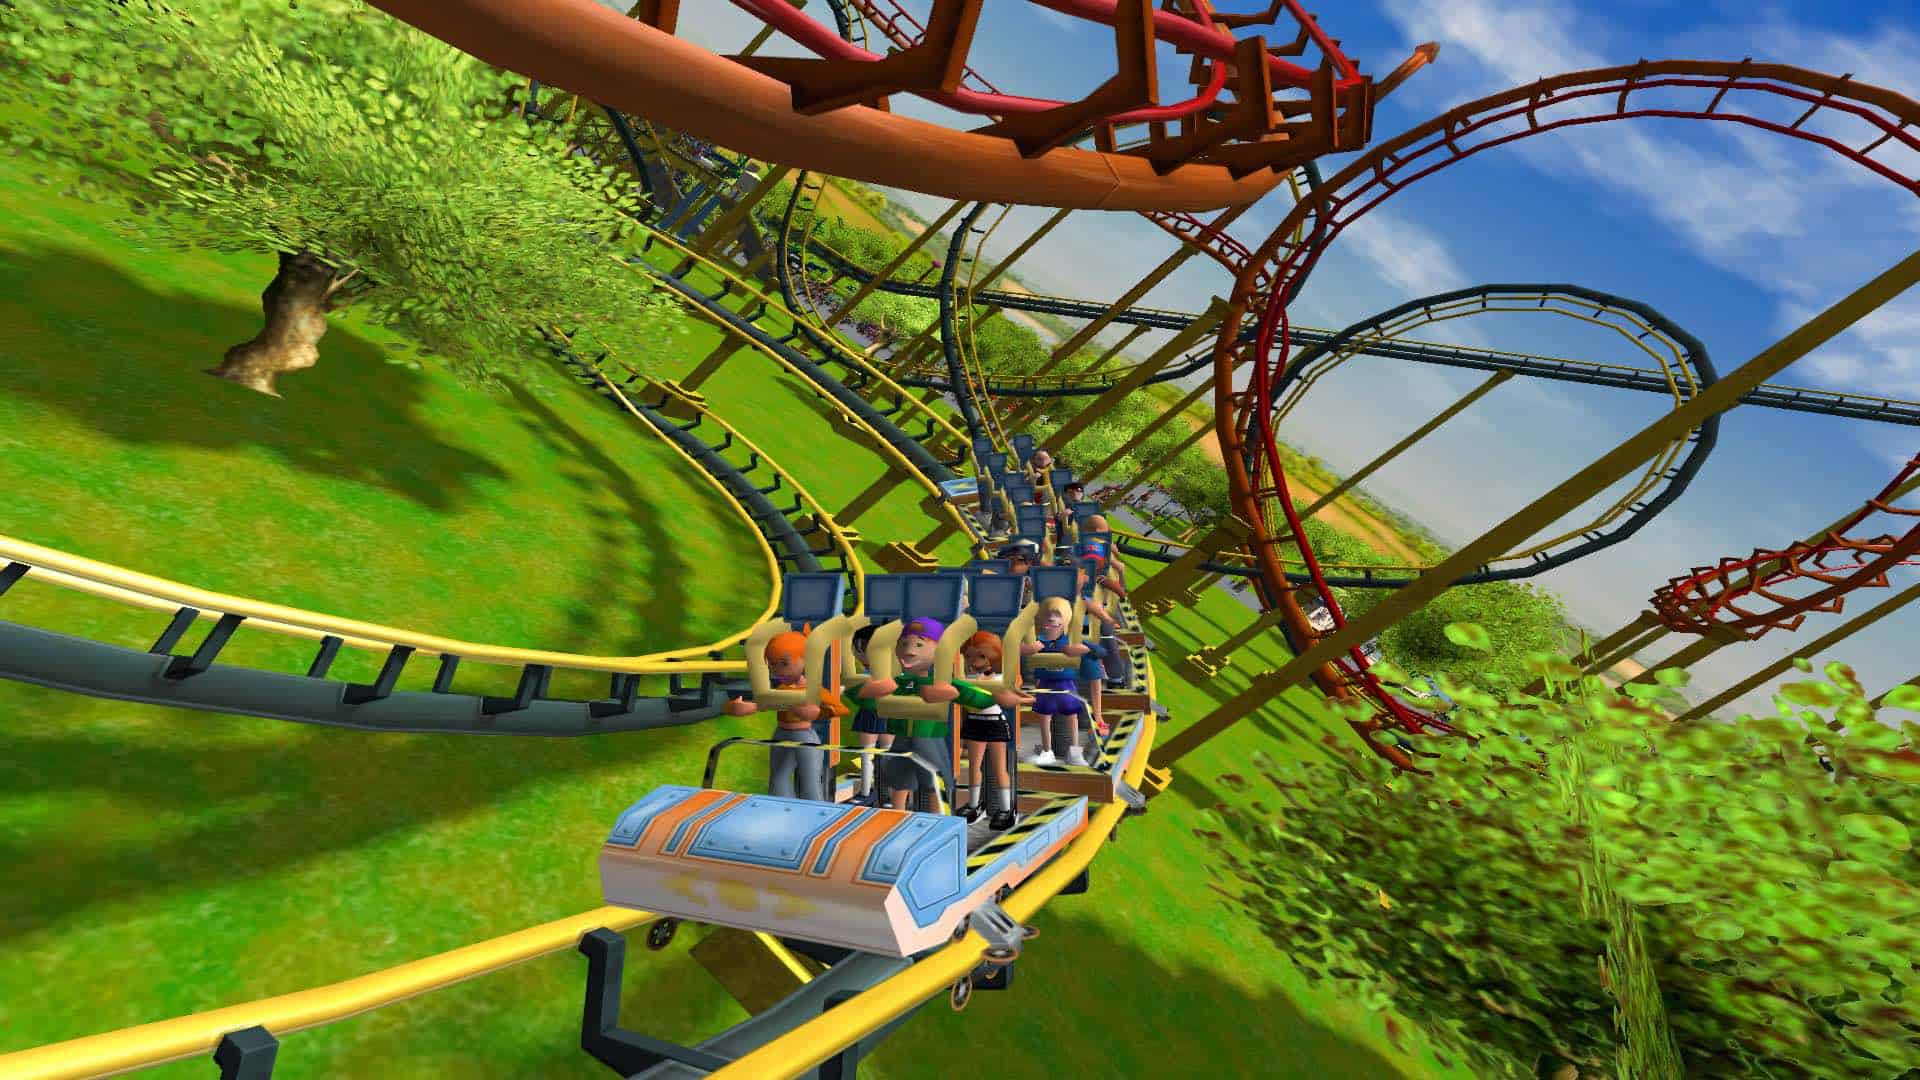 play roller coaster tycoon mac free